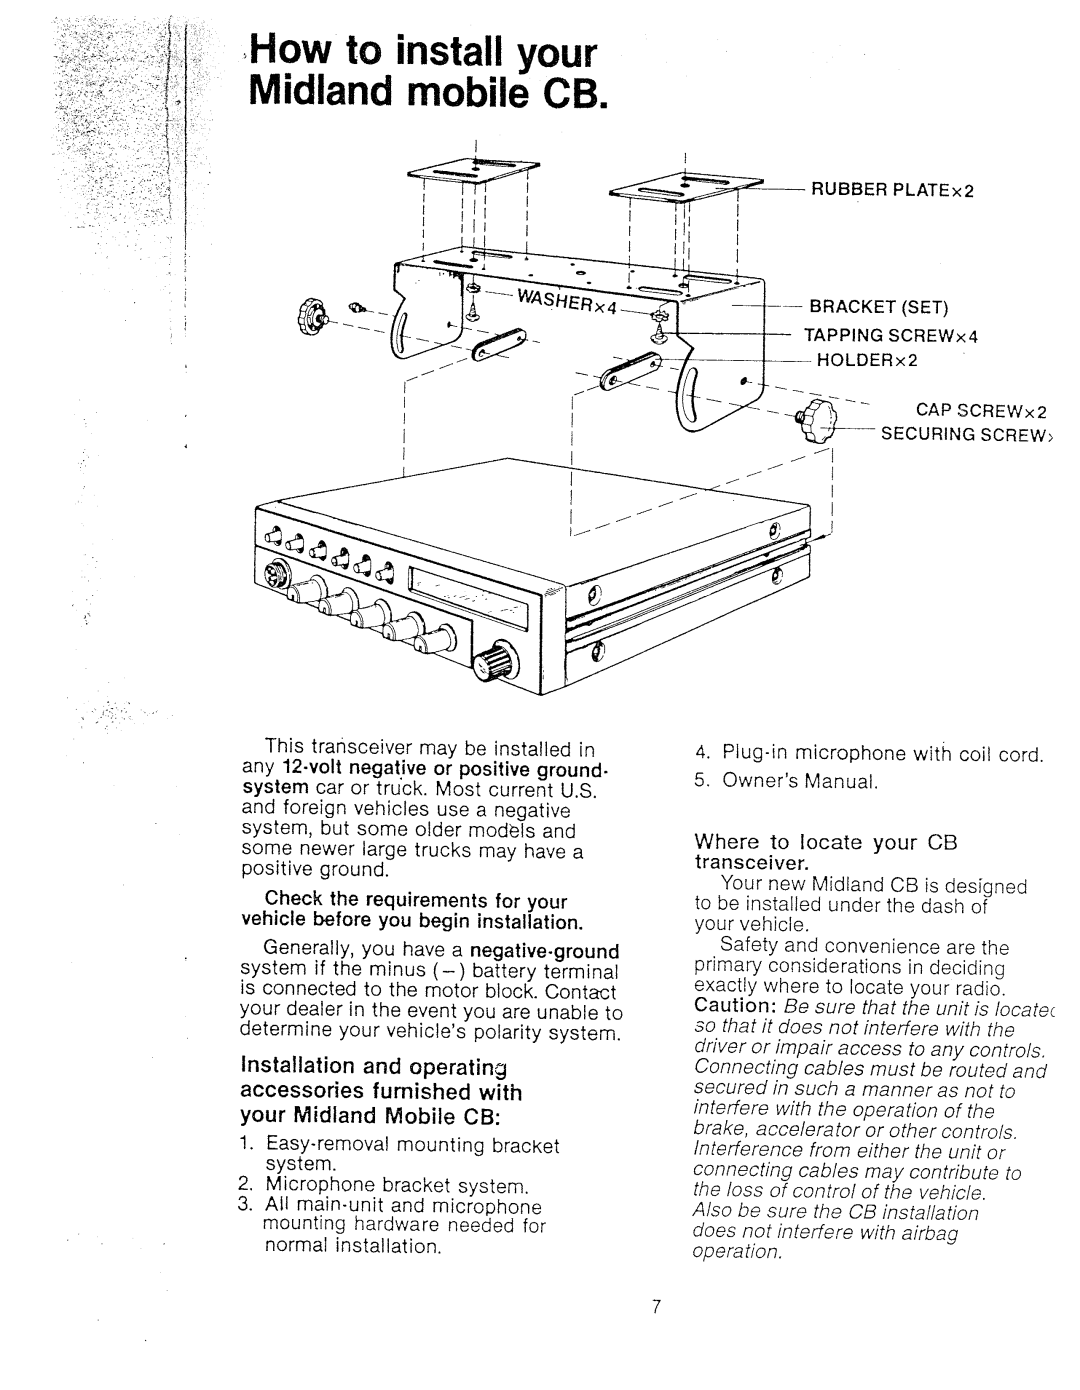 Midland Radio 77-250CXL manual 